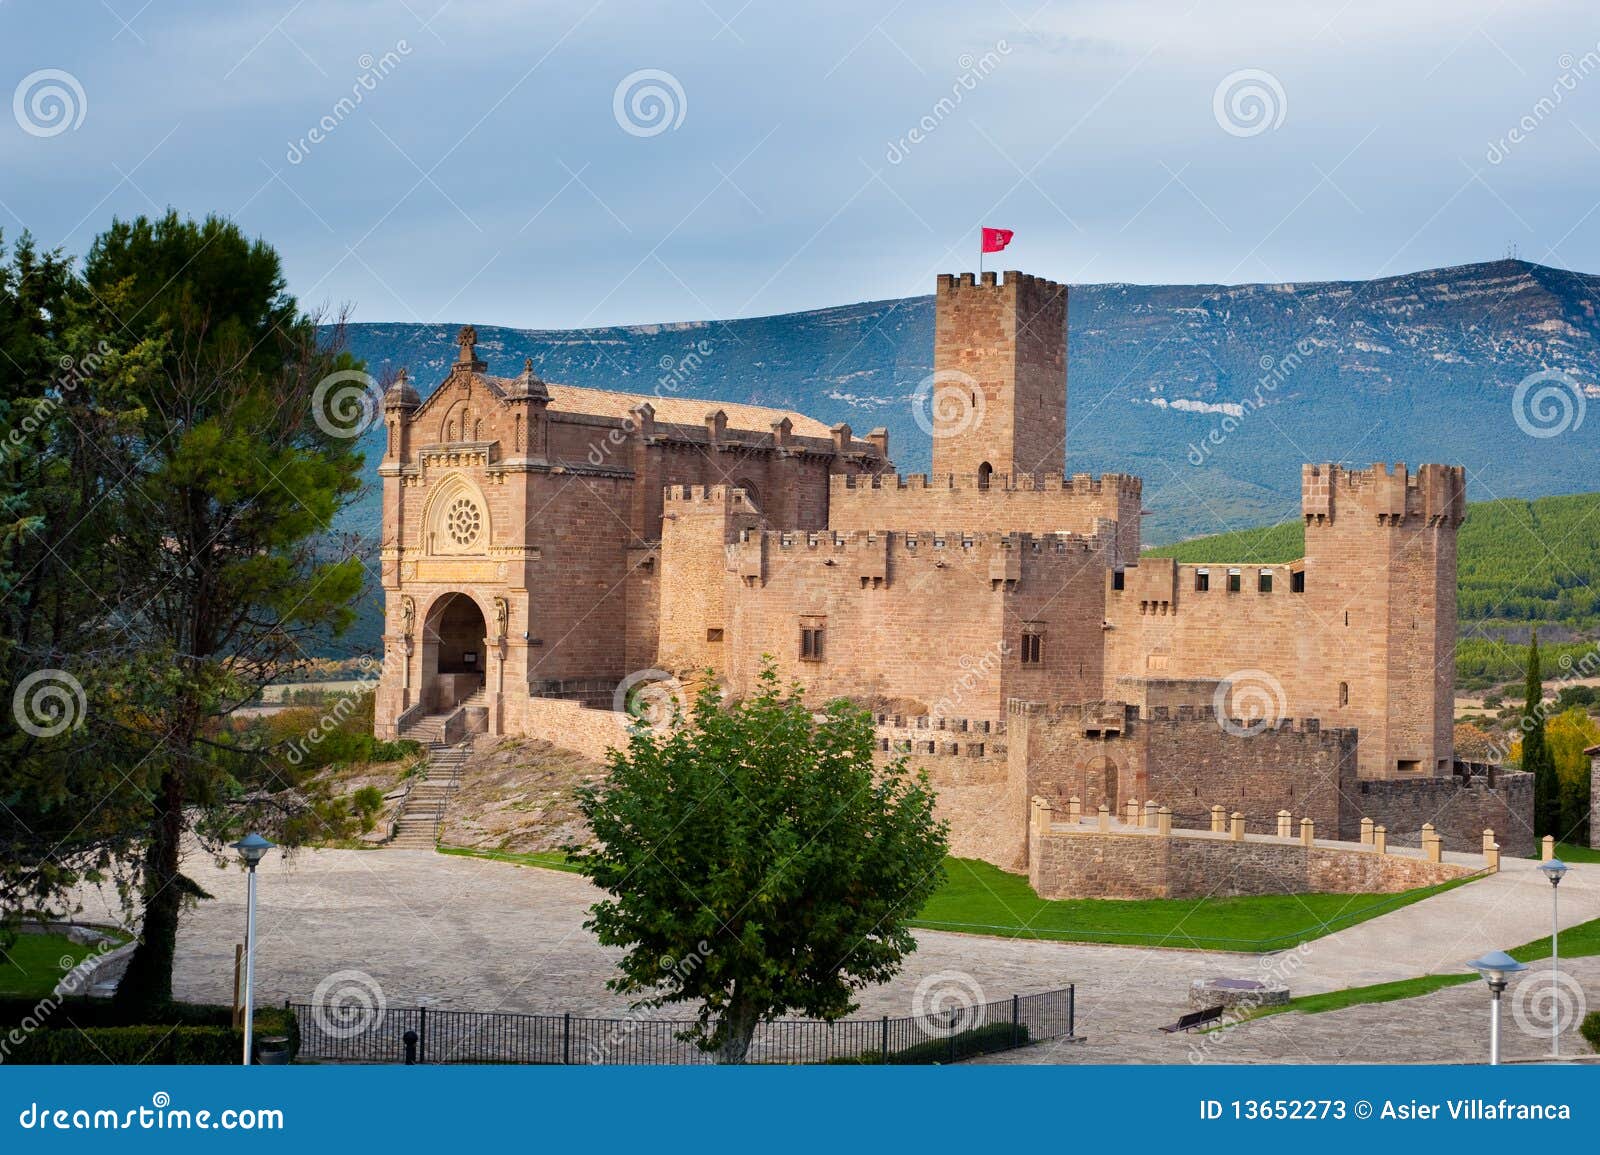 castle of xavier in navarre